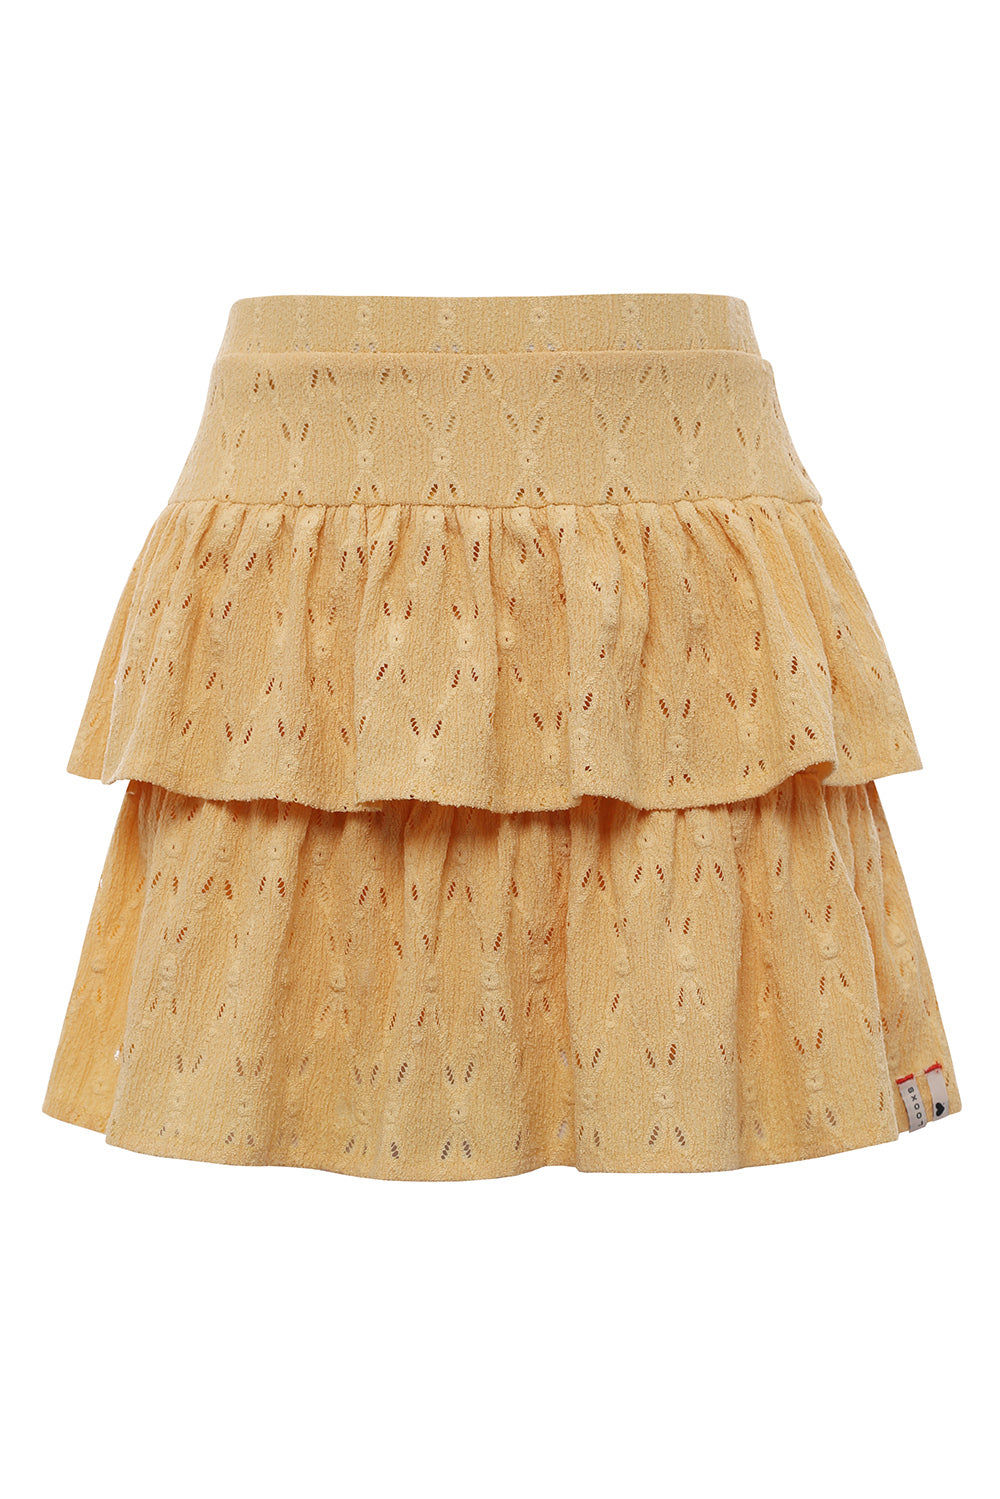 LOOXS Little Fancy Skirt